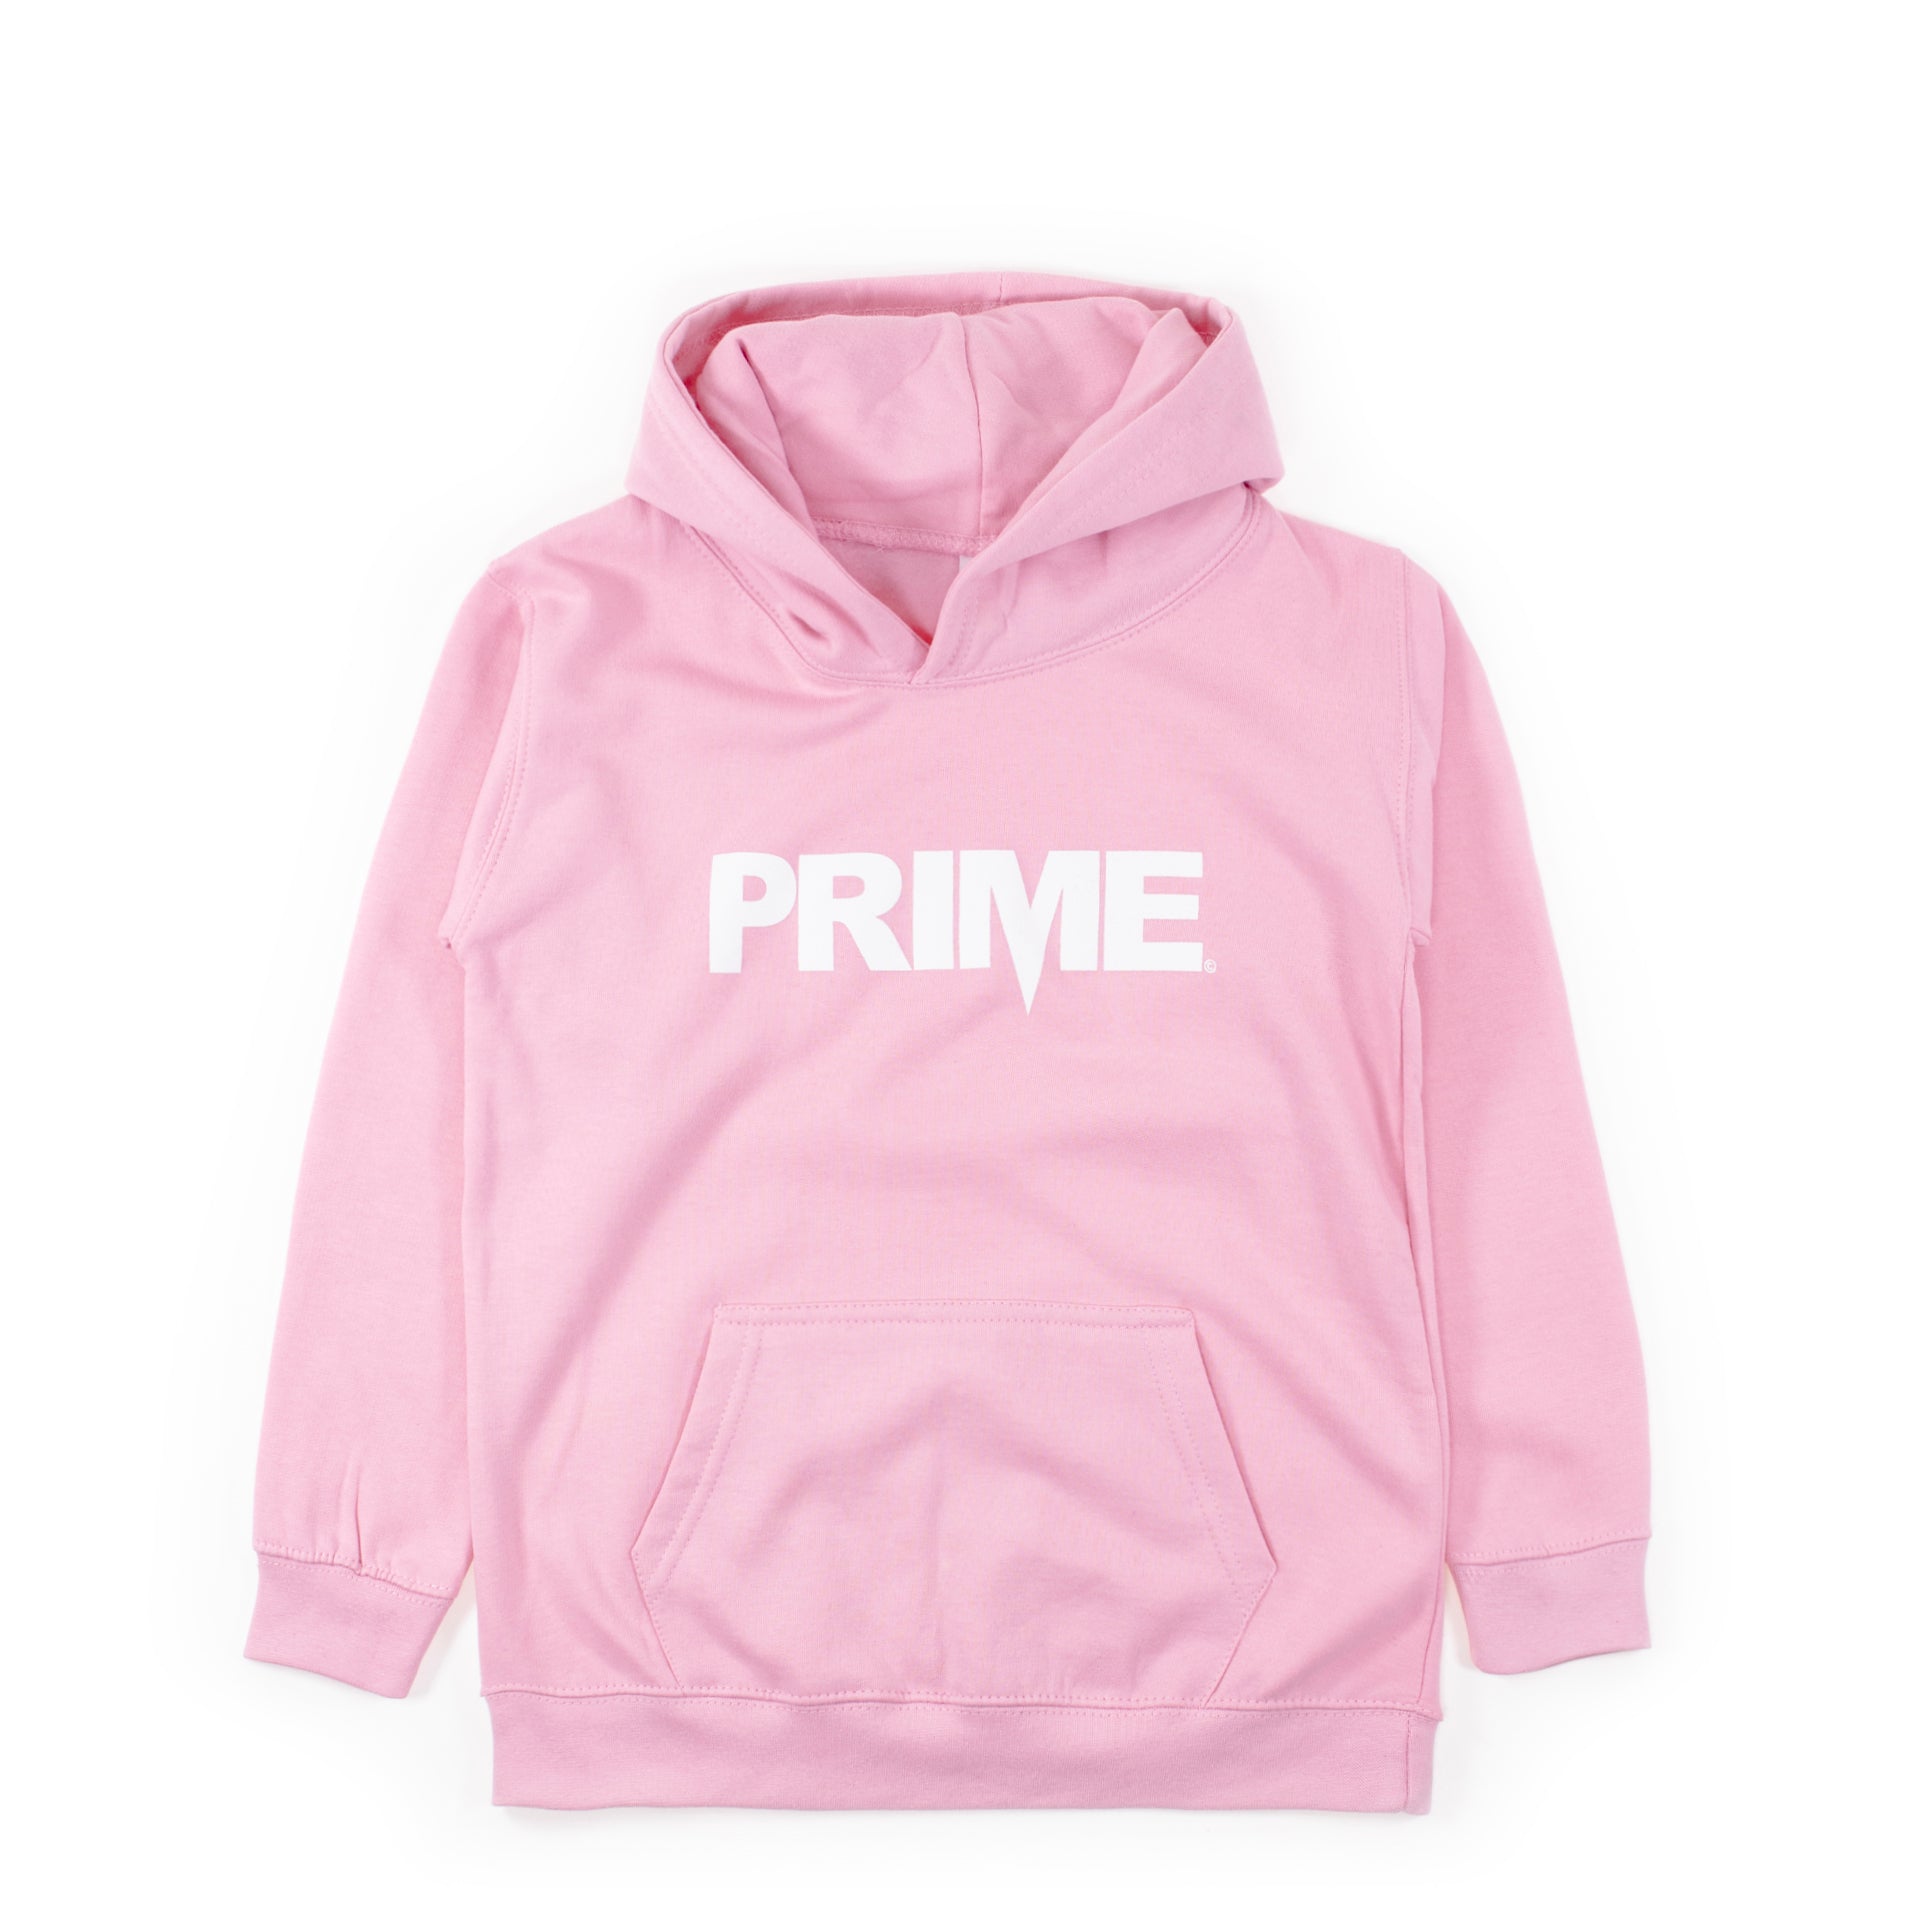 Prime Delux OG Logo Kids Hooded Sweat - Light Pink / White - Prime Delux Store